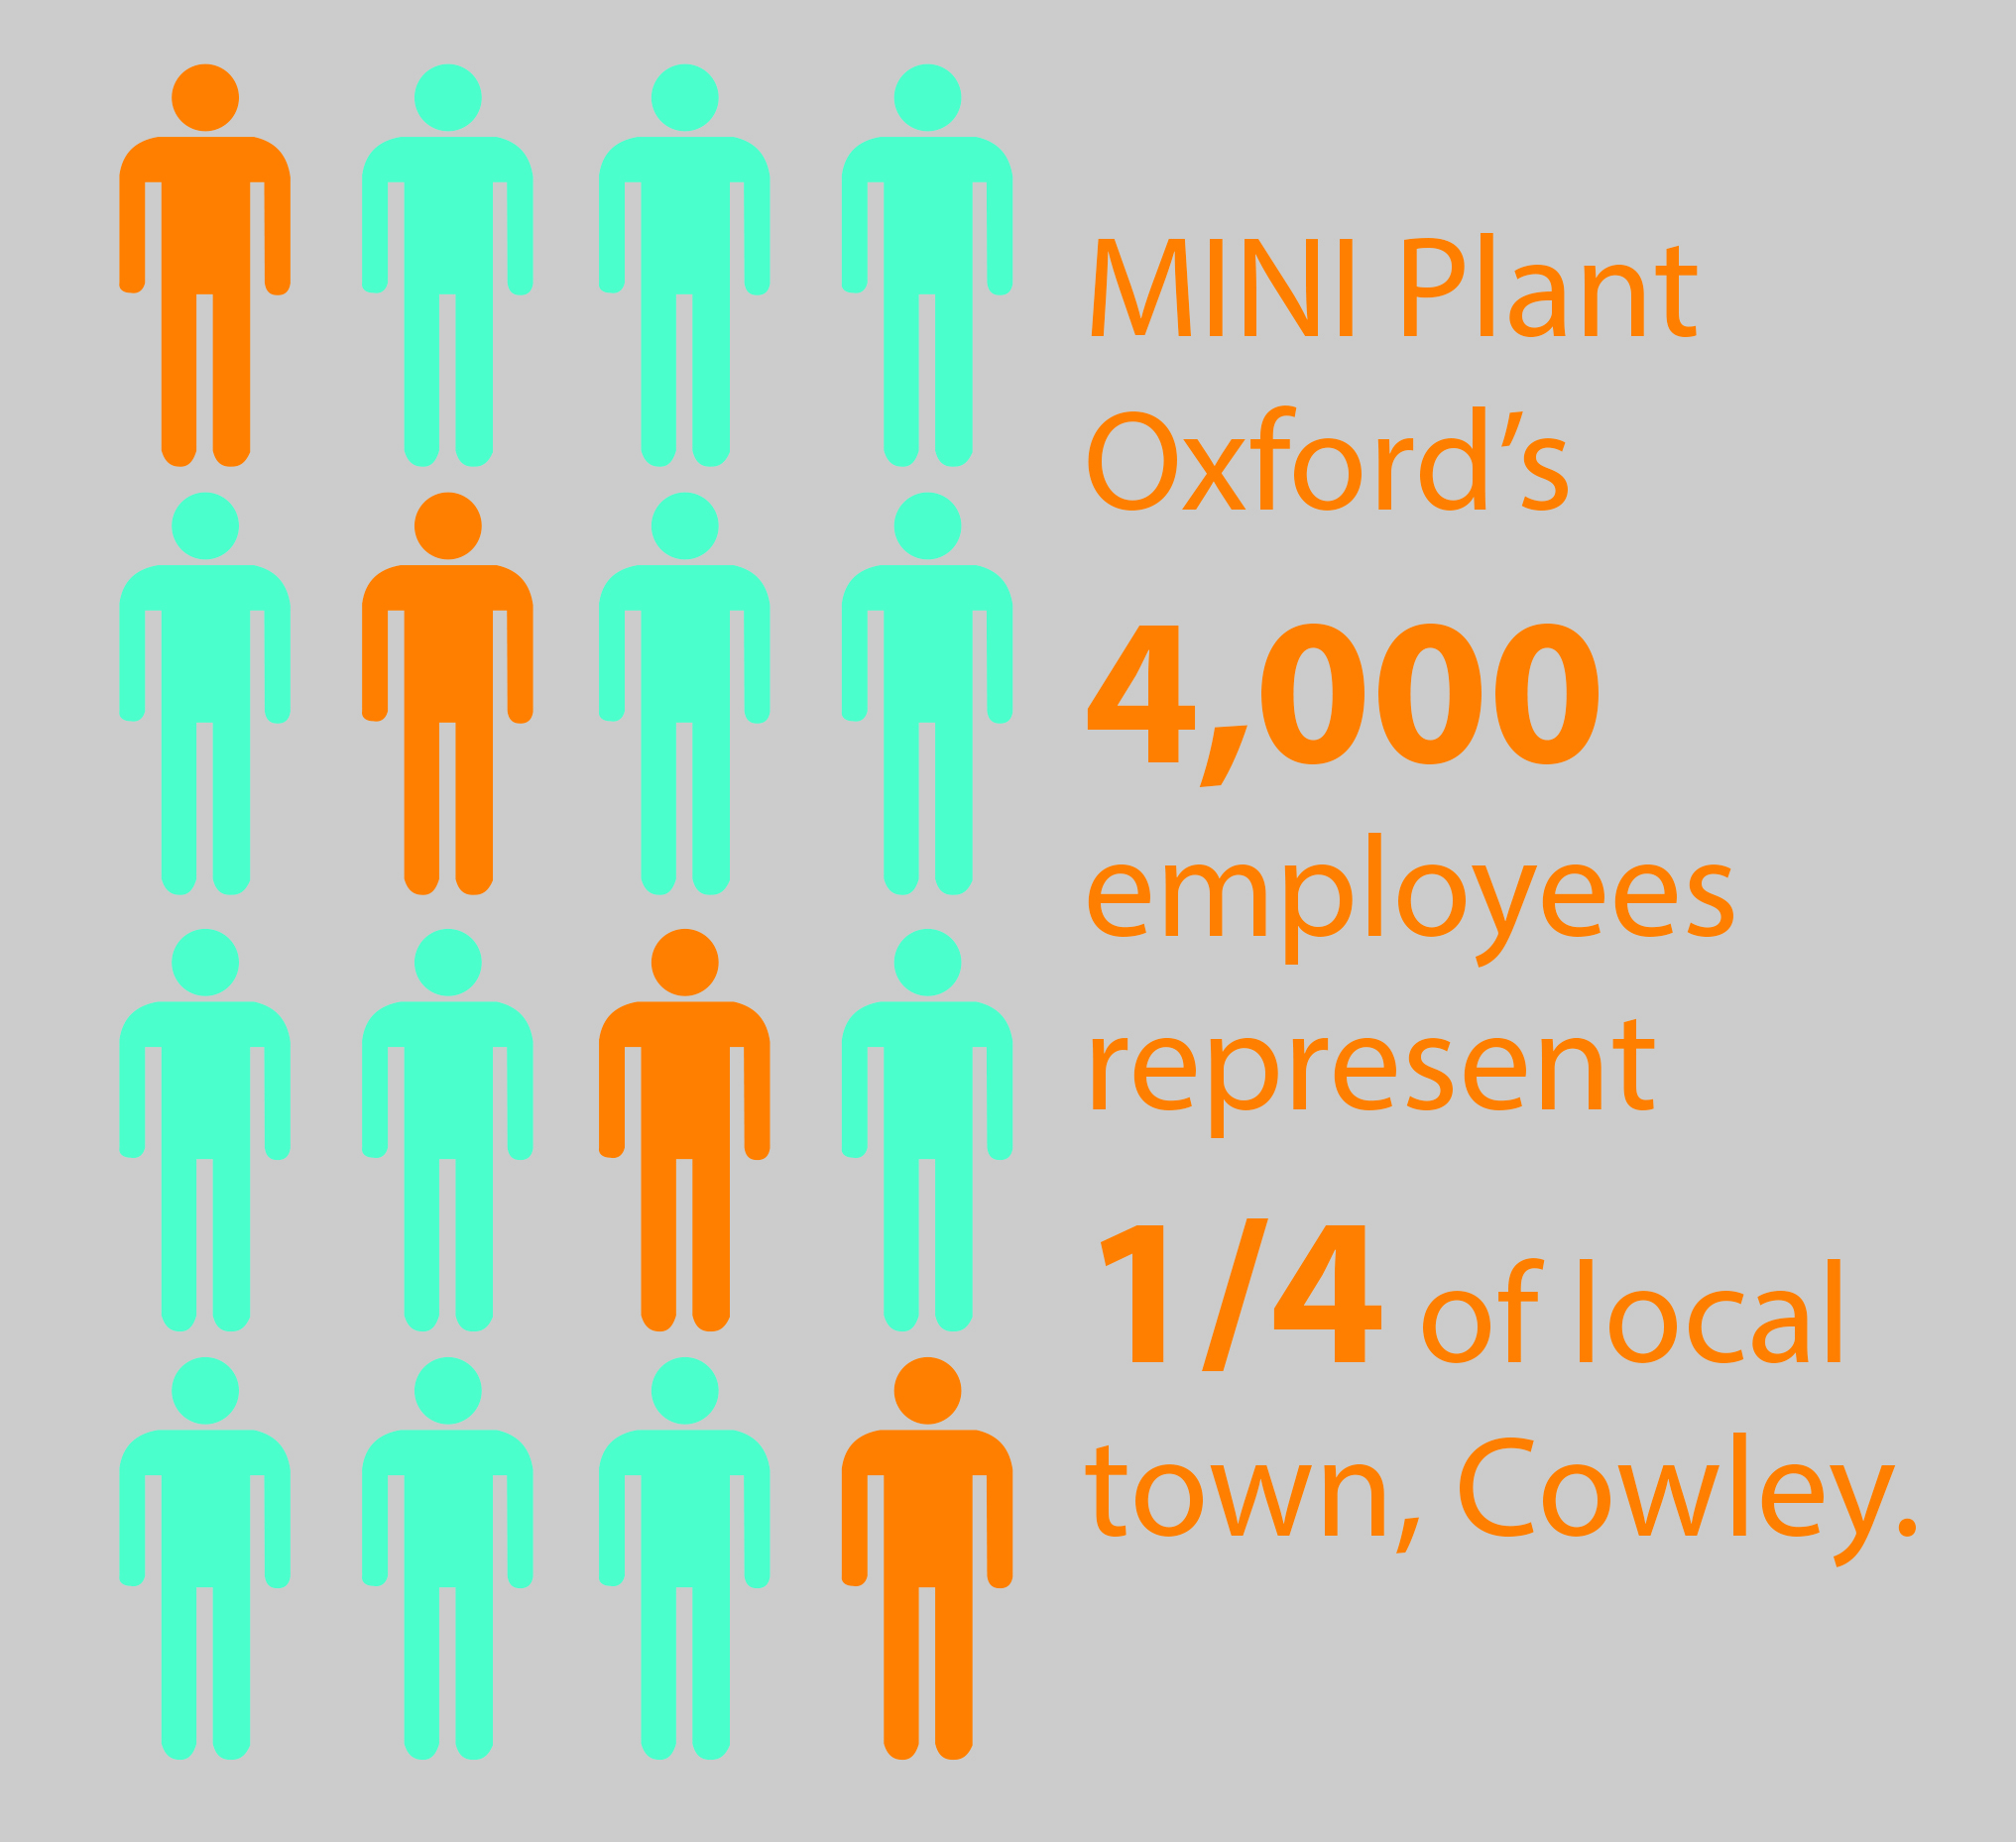 MINI Plant Oxford employs 4,000 people